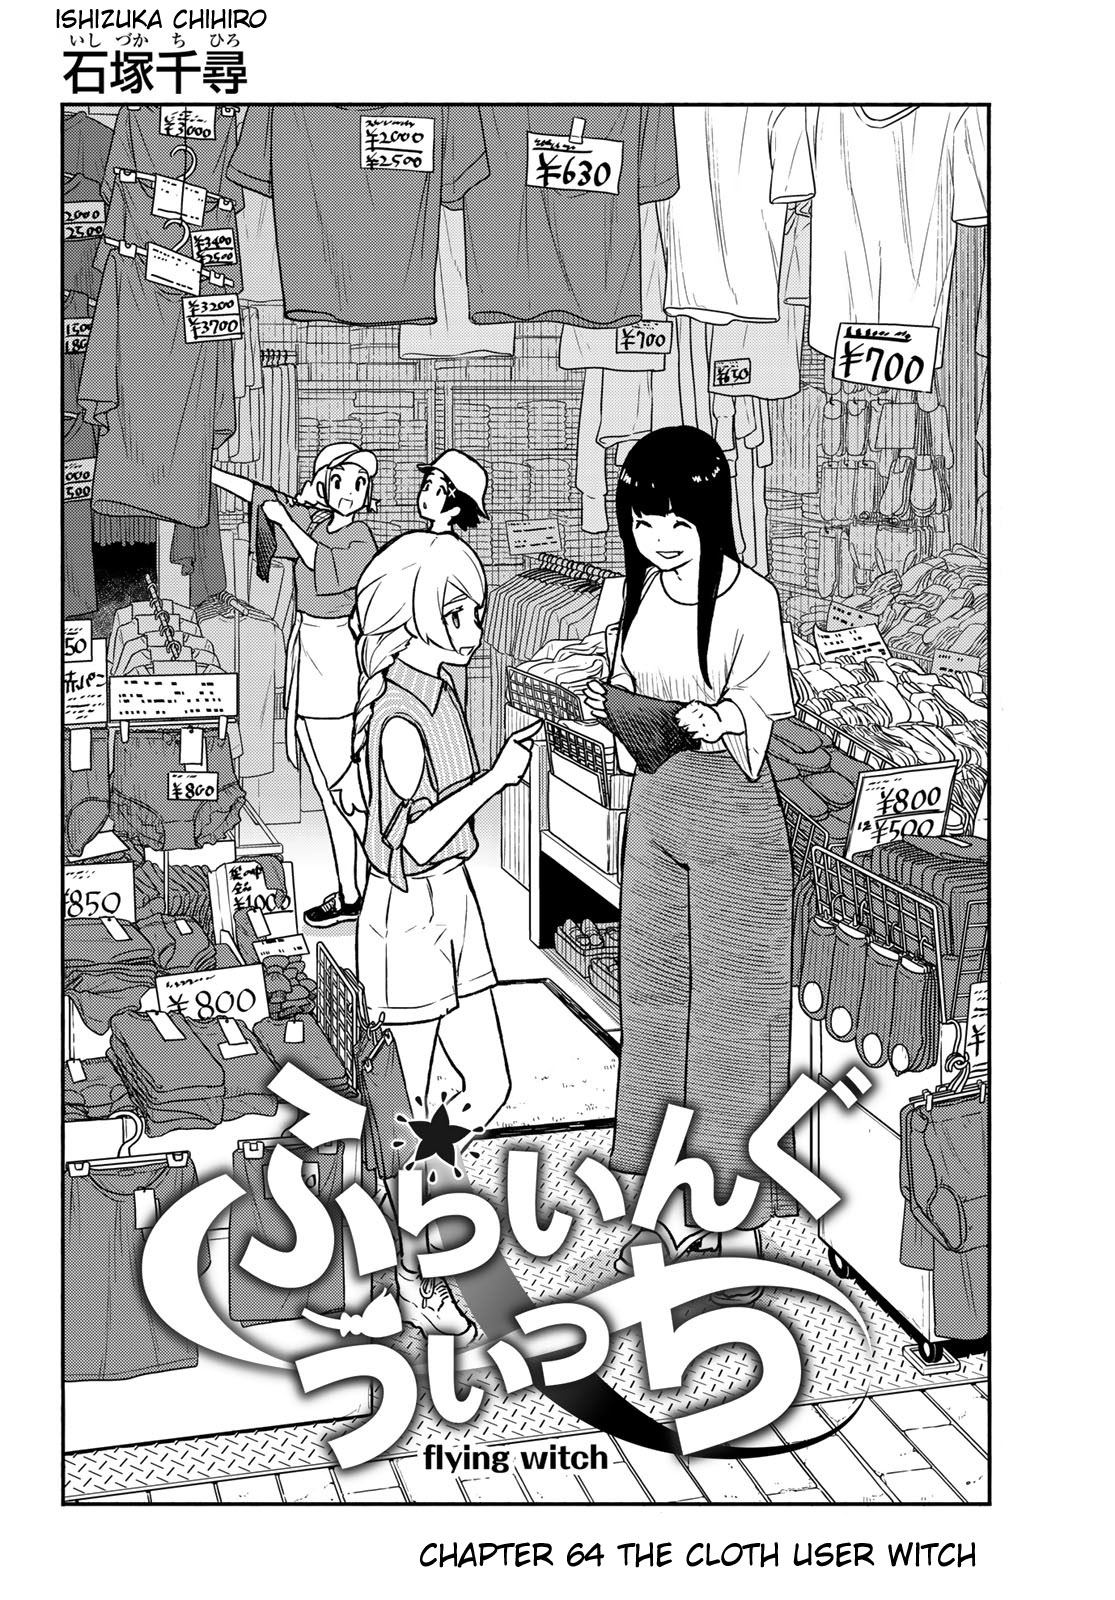 Flying Witch (ISHIZUKA Chihiro) - chapter 64 - #2